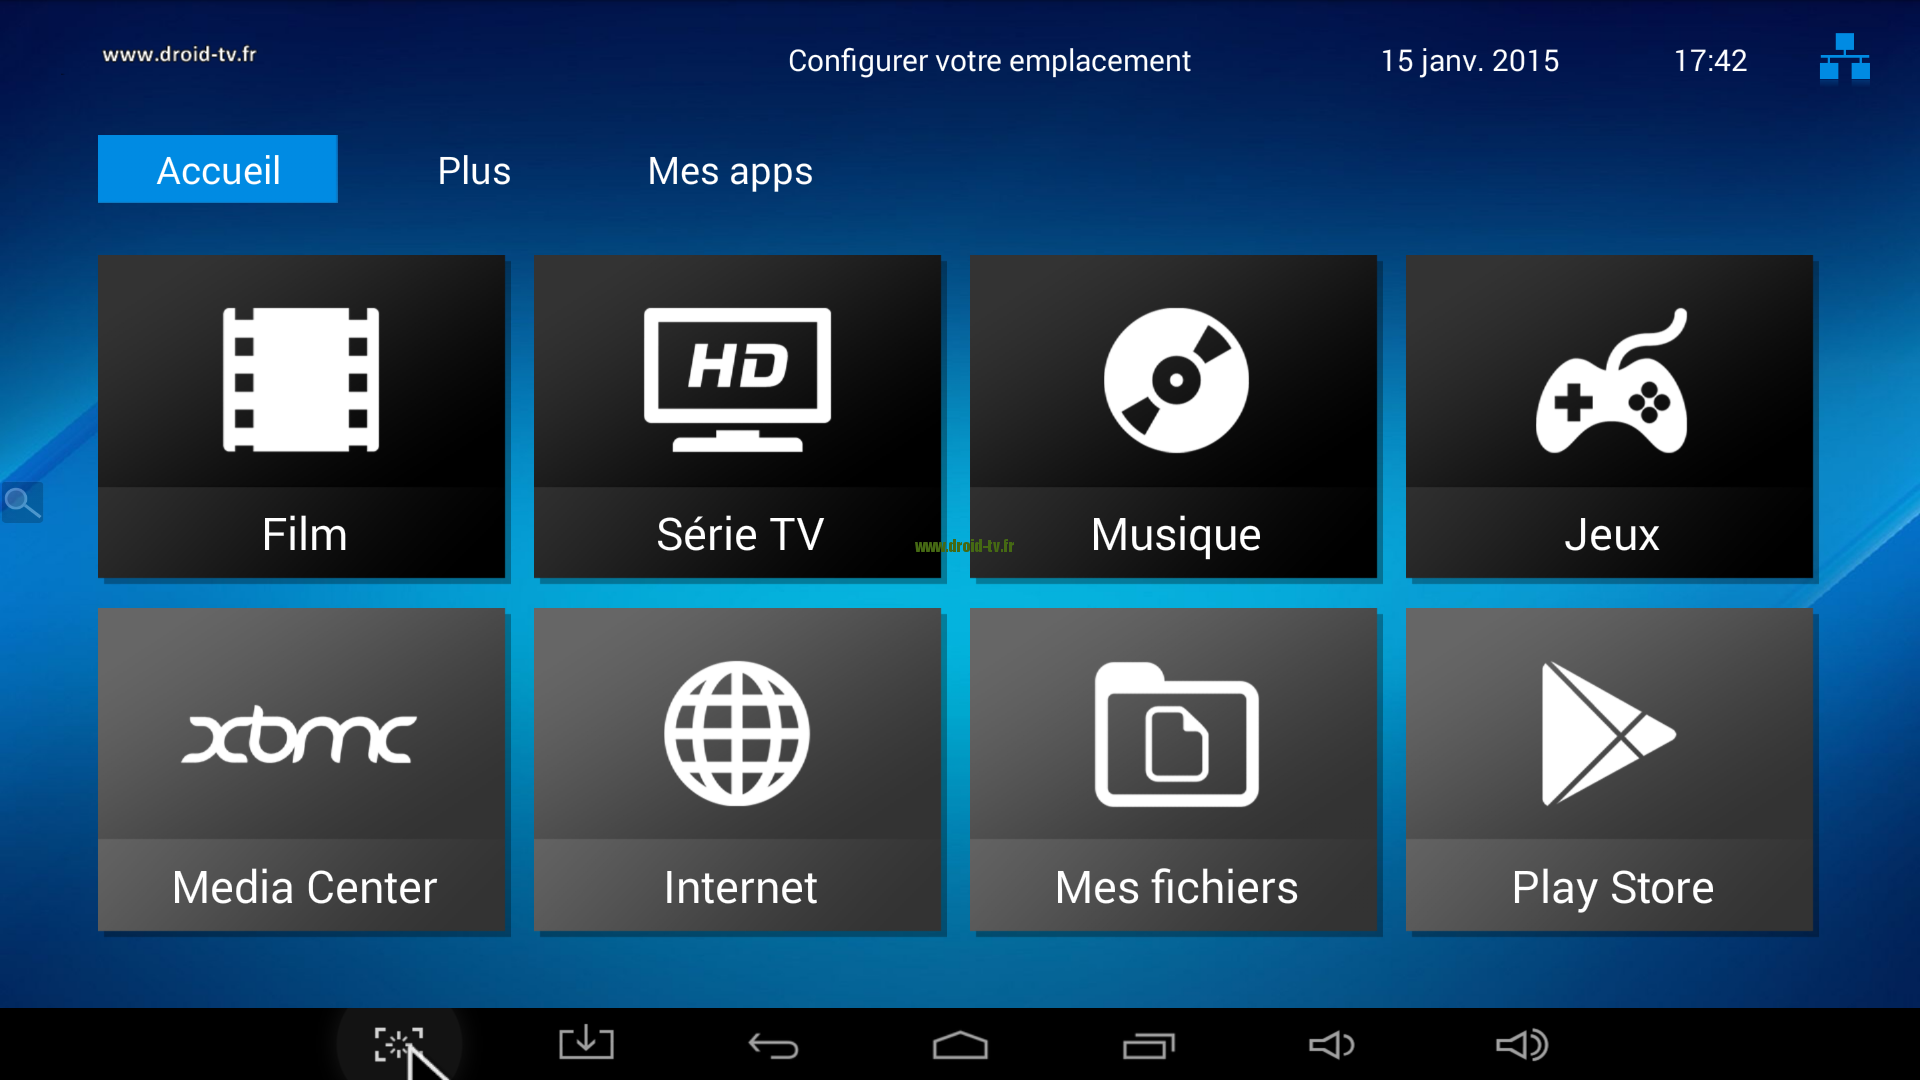 Accueil tableau de bord Android Droid-TV.fr